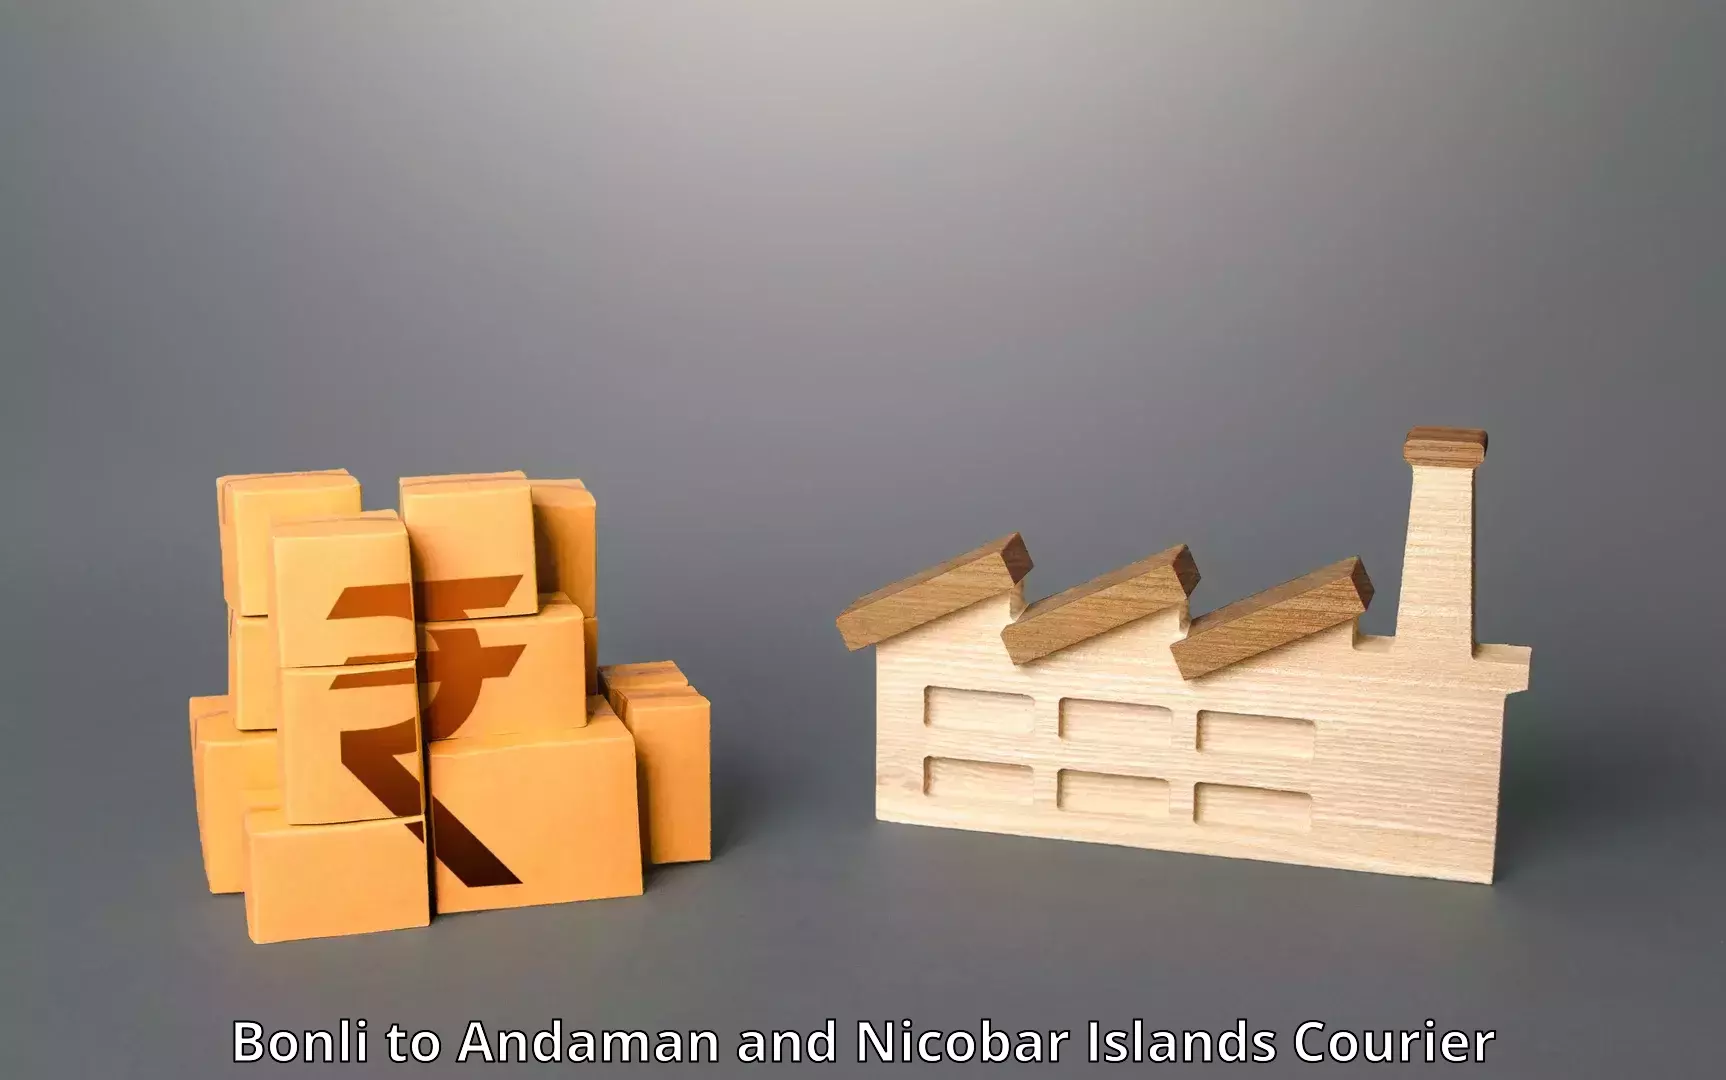 Courier service comparison Bonli to Andaman and Nicobar Islands